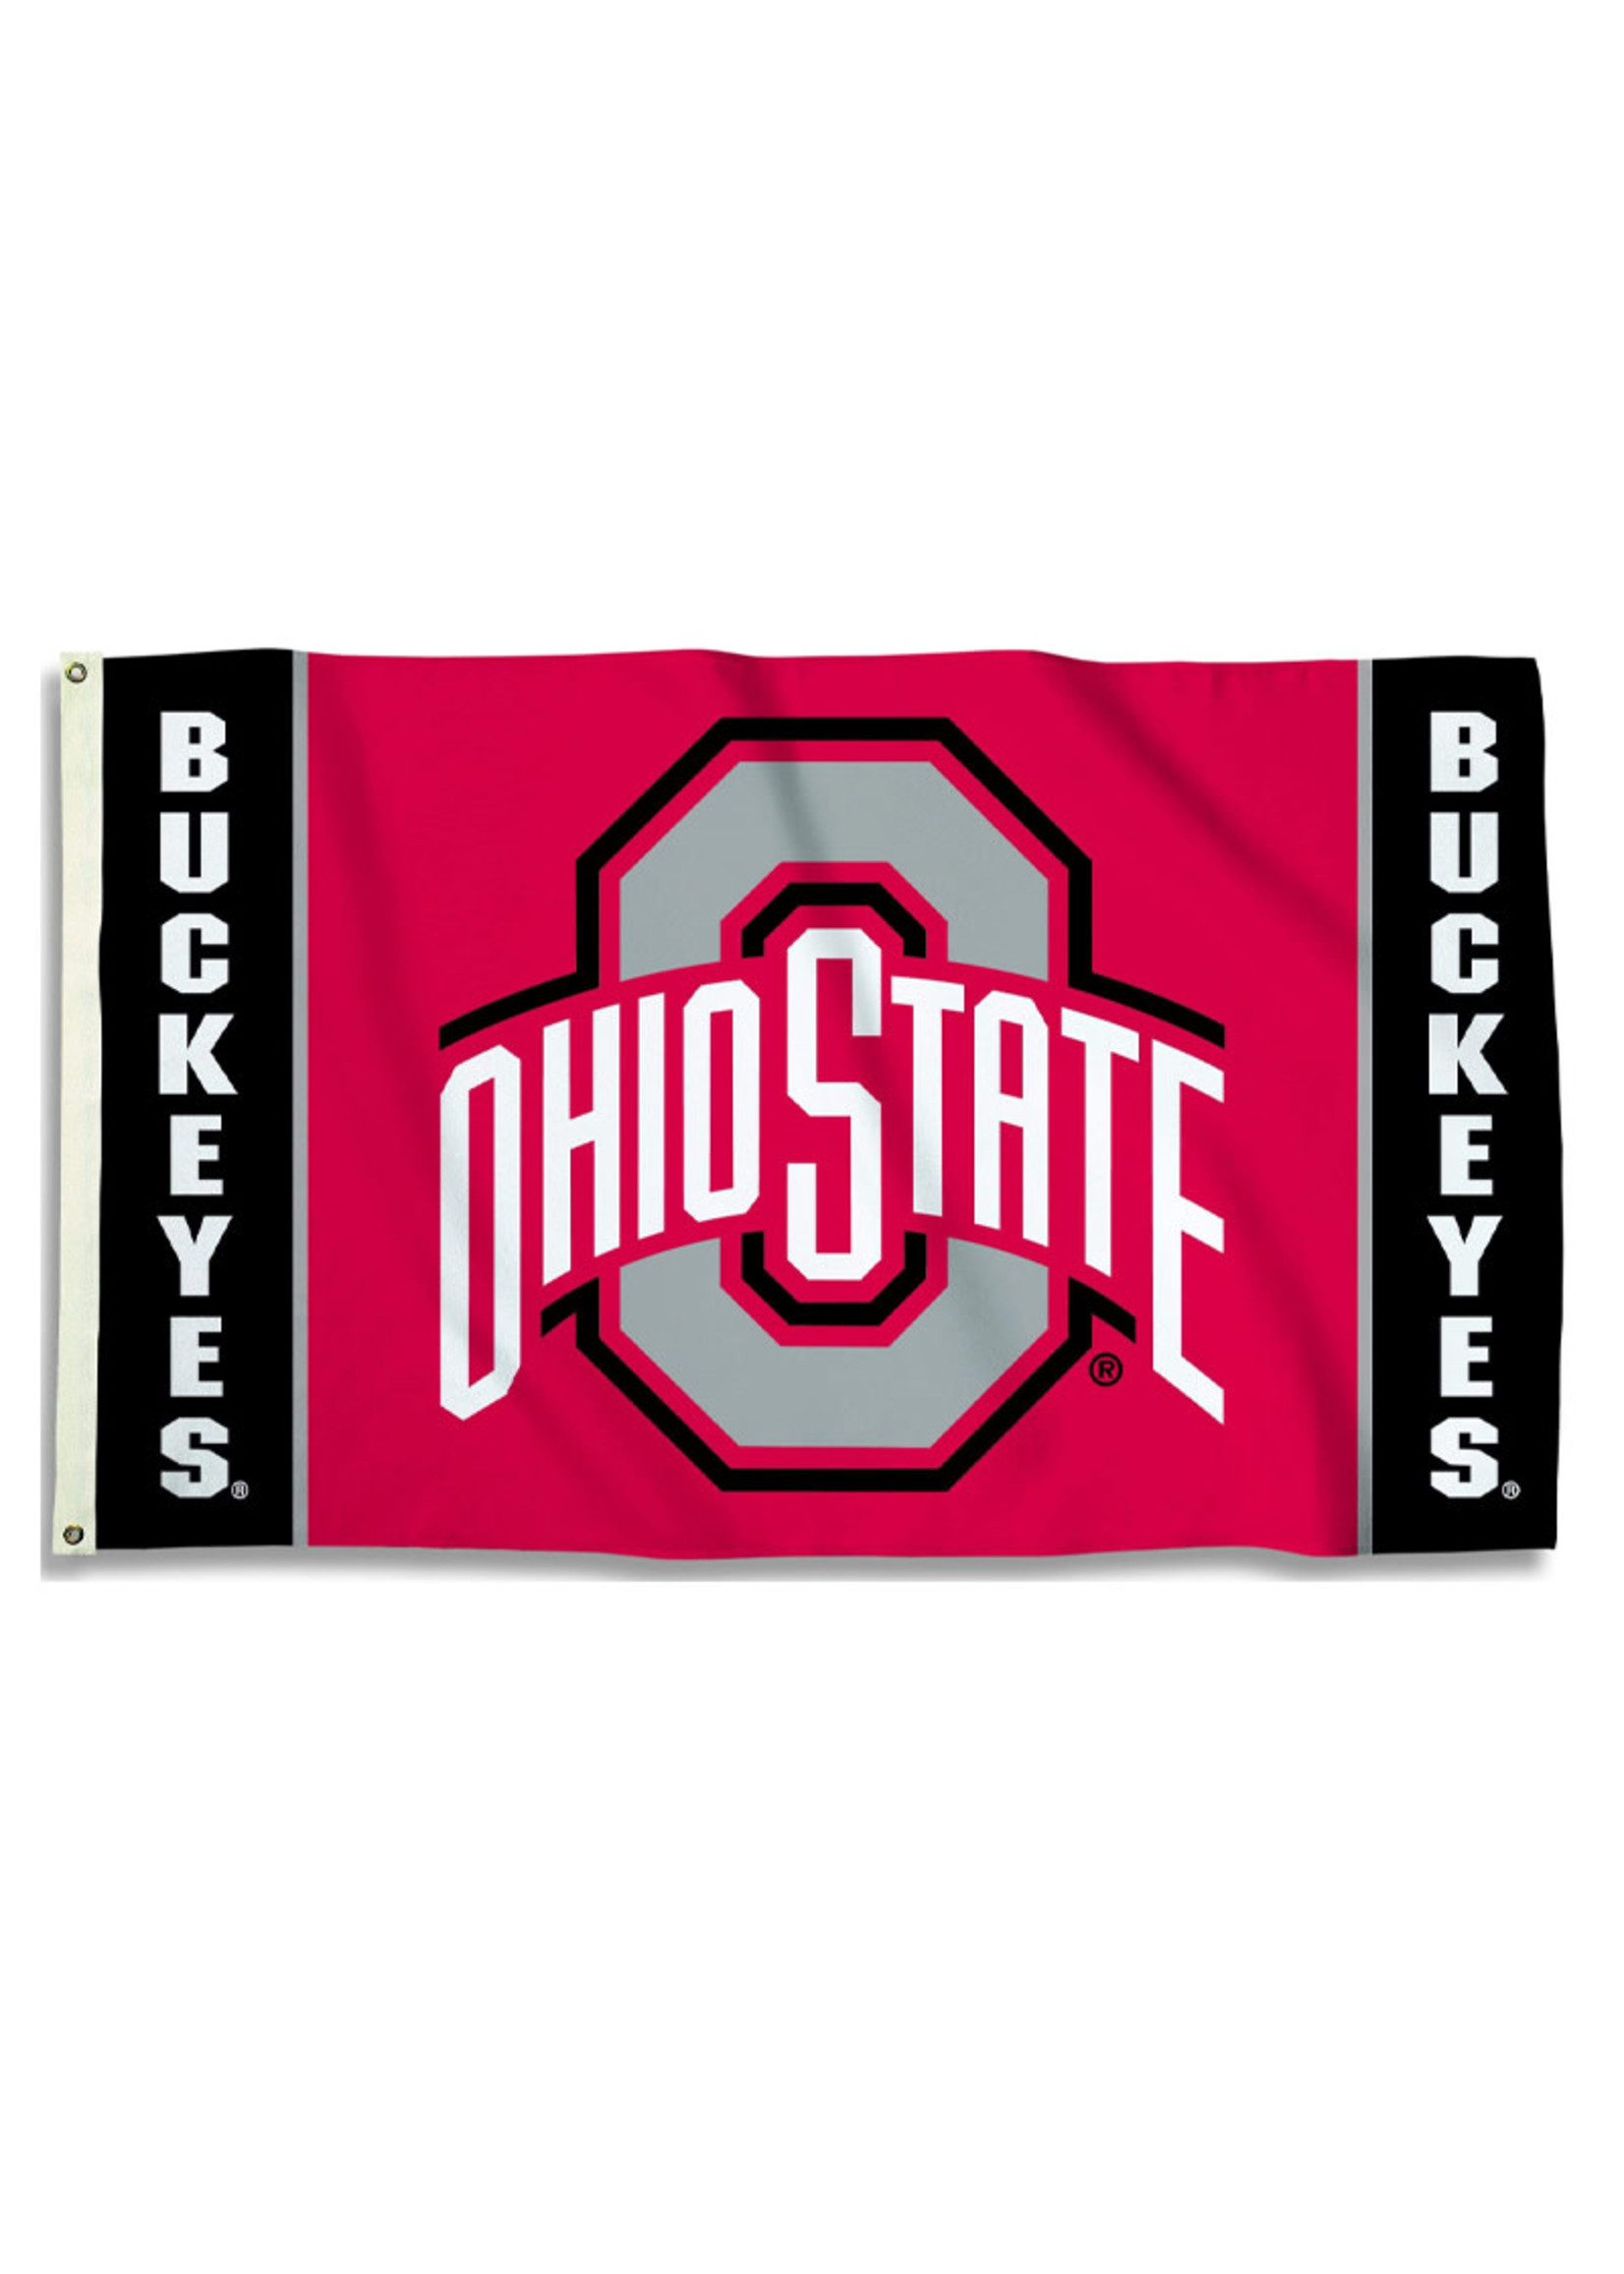 Ohio State Buckeyes Flag 3' x 5'